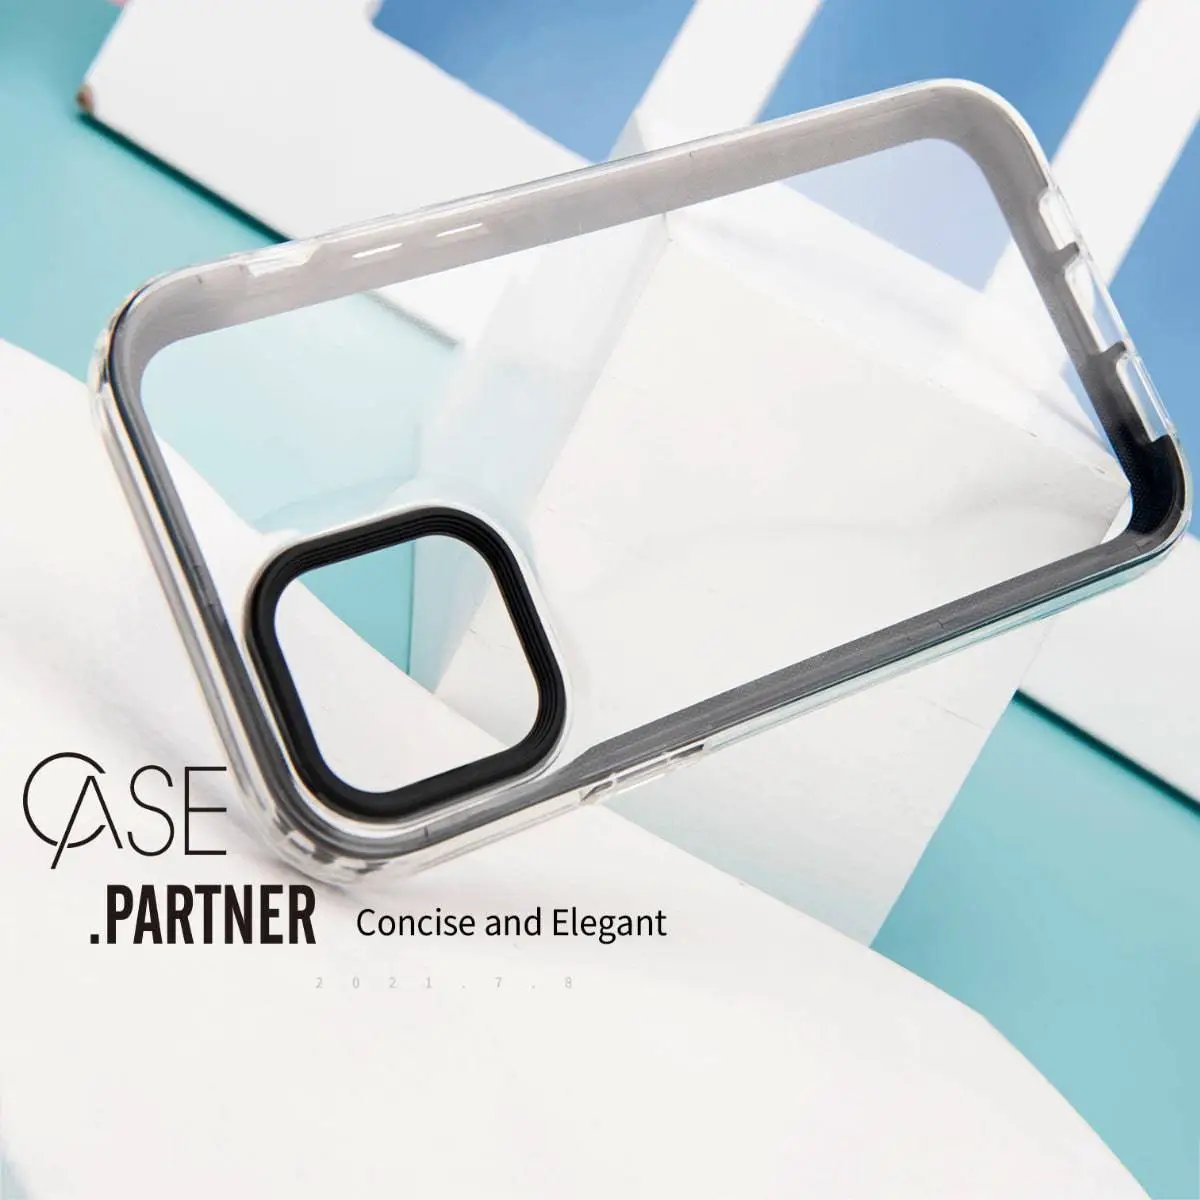 iPhone 12 Mini Clear Case Macaron Shockproof - Hugmie